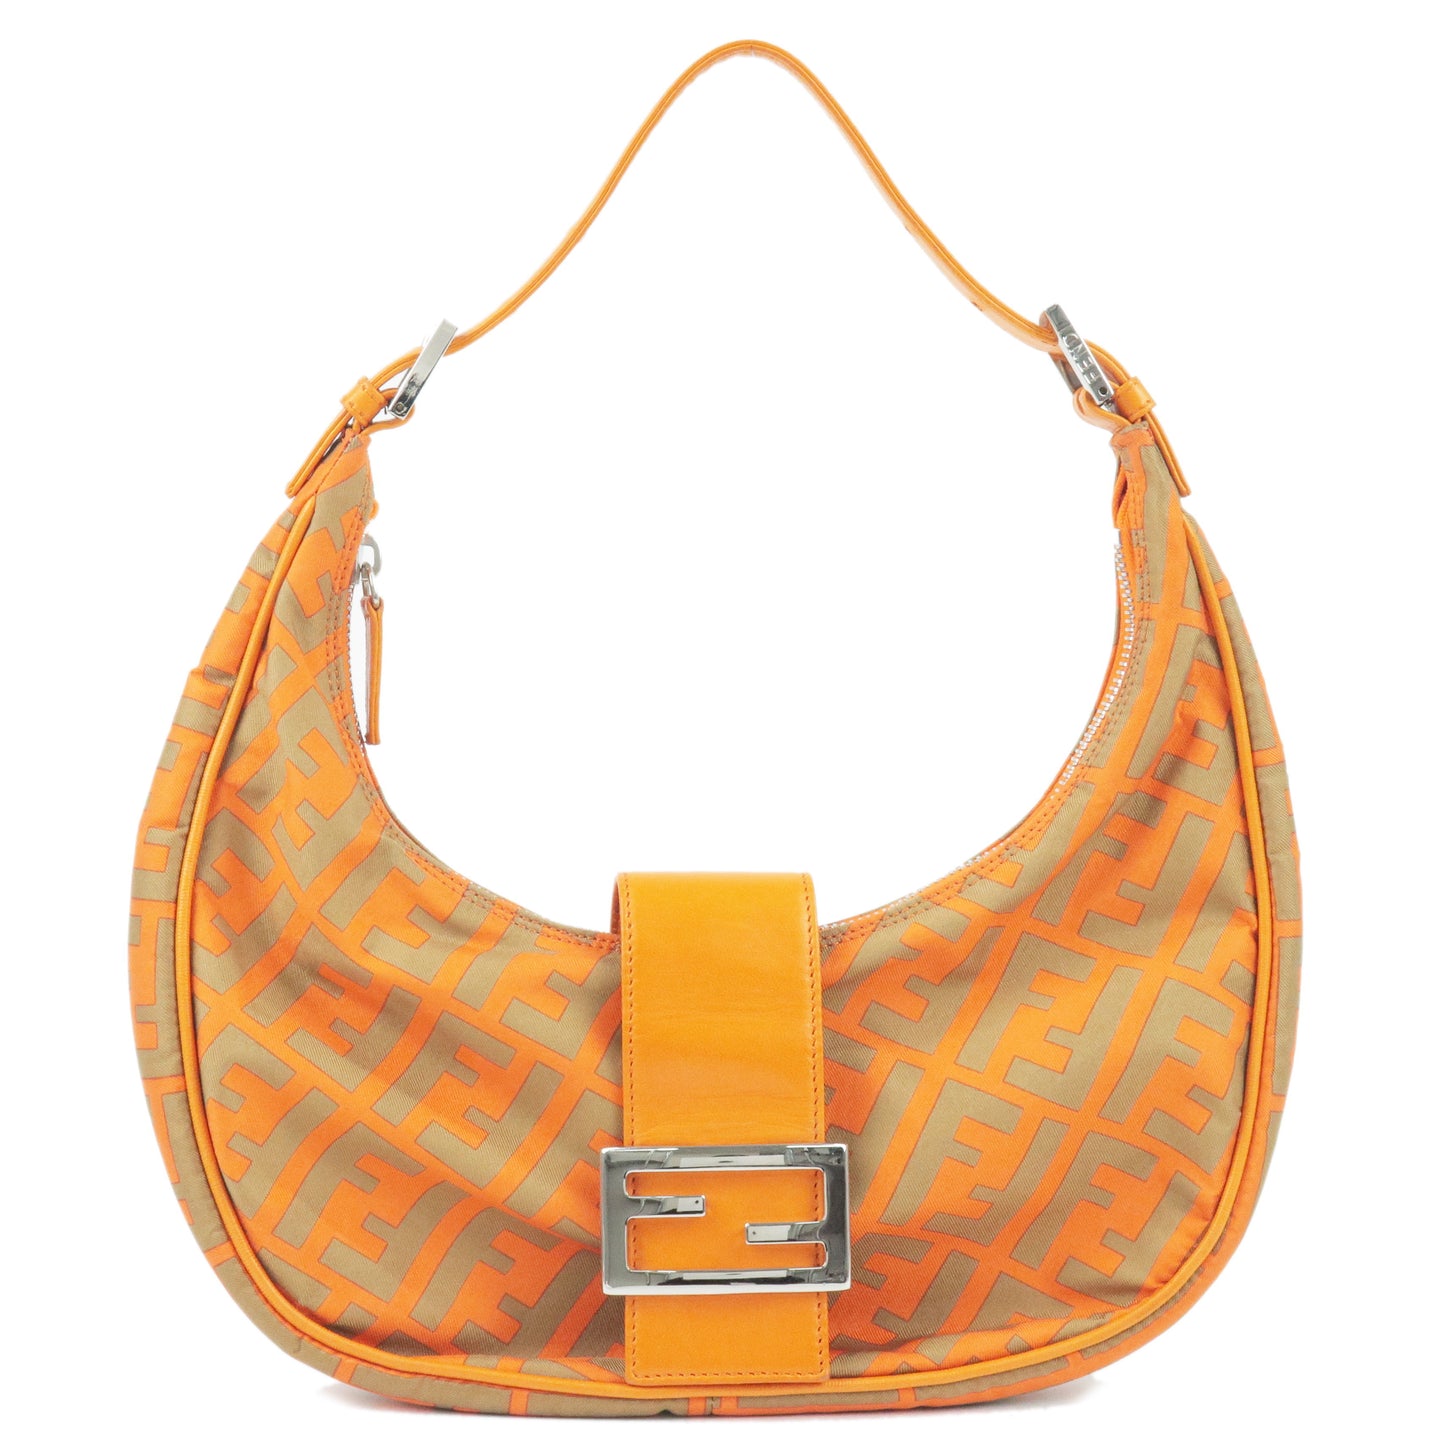 FENDI-Zucca-Nylon-Leather-Shoulder-Bag-Orange-Khaki-09163211001